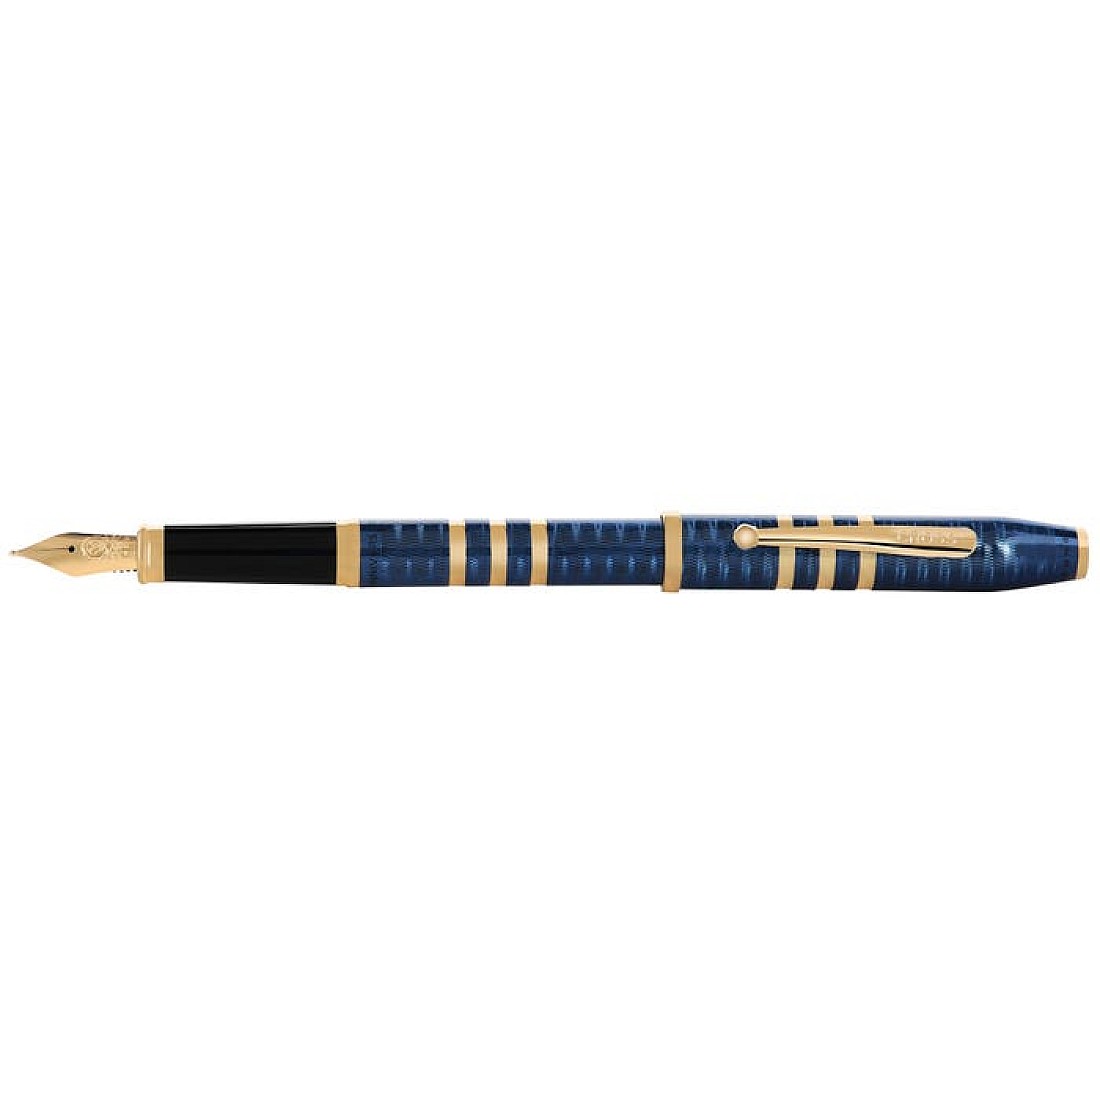 Brand New In Box Cross Century II Rollerball Pen Translucent Blue & Chrome 